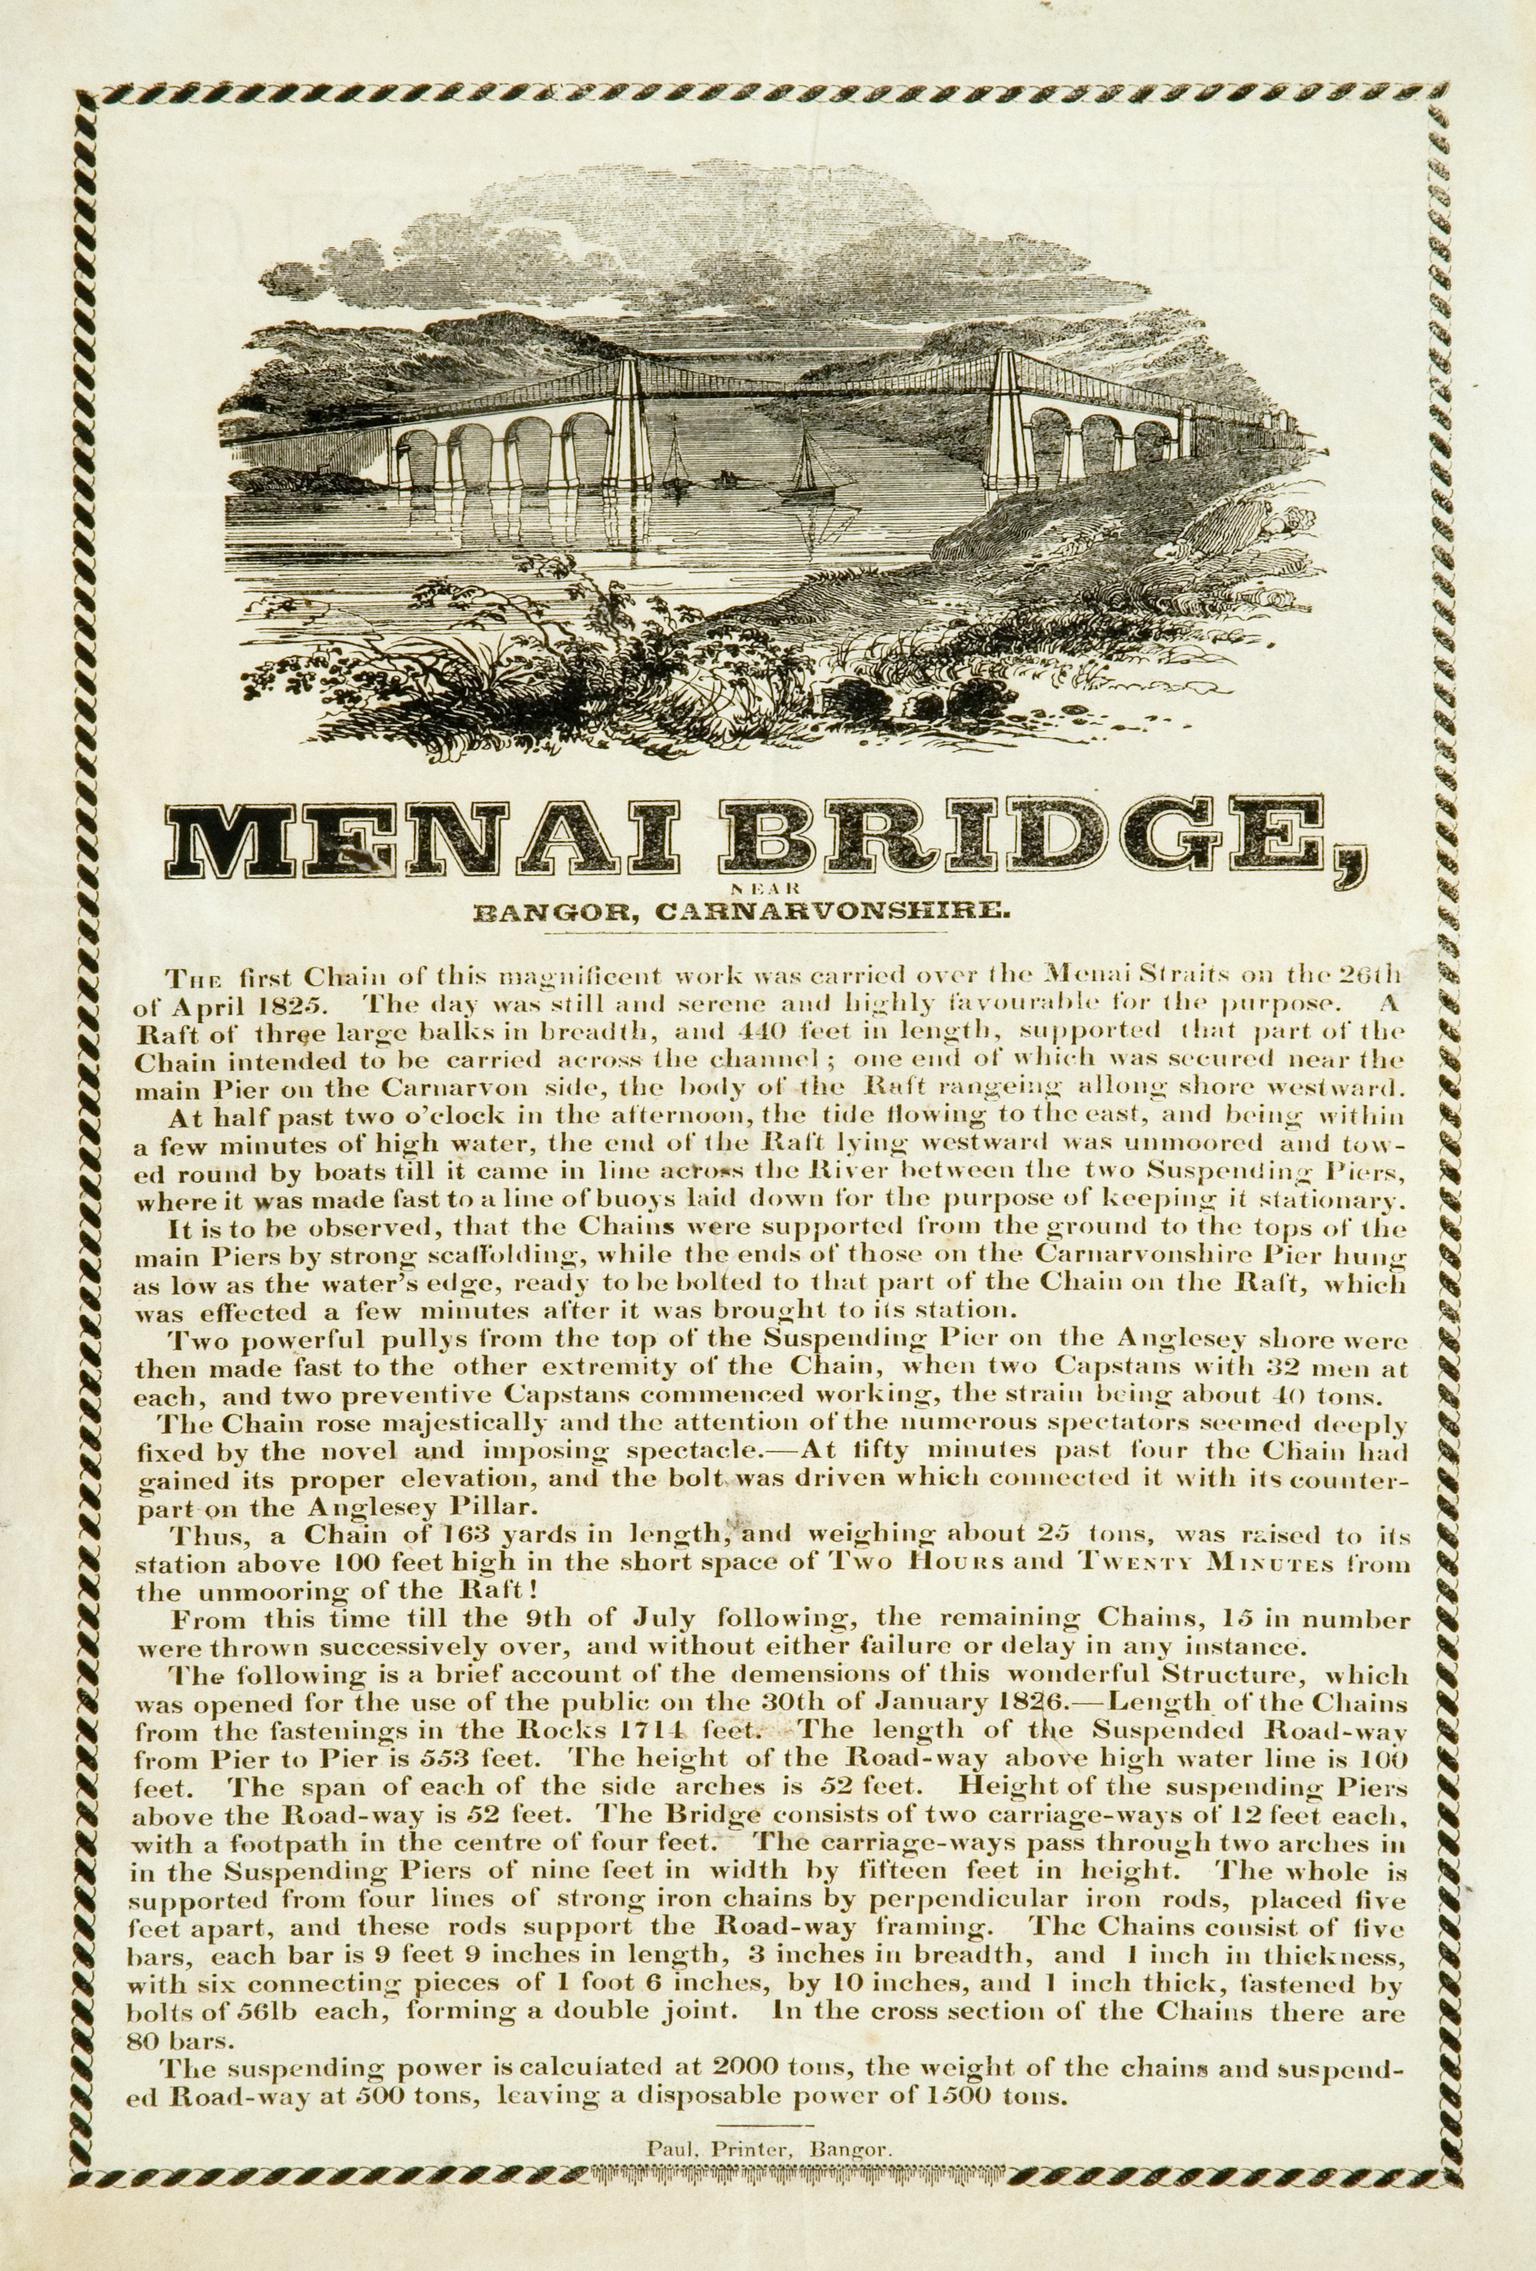 Menai Bridge, Near Bangor, Caernarvonshire (handbill)